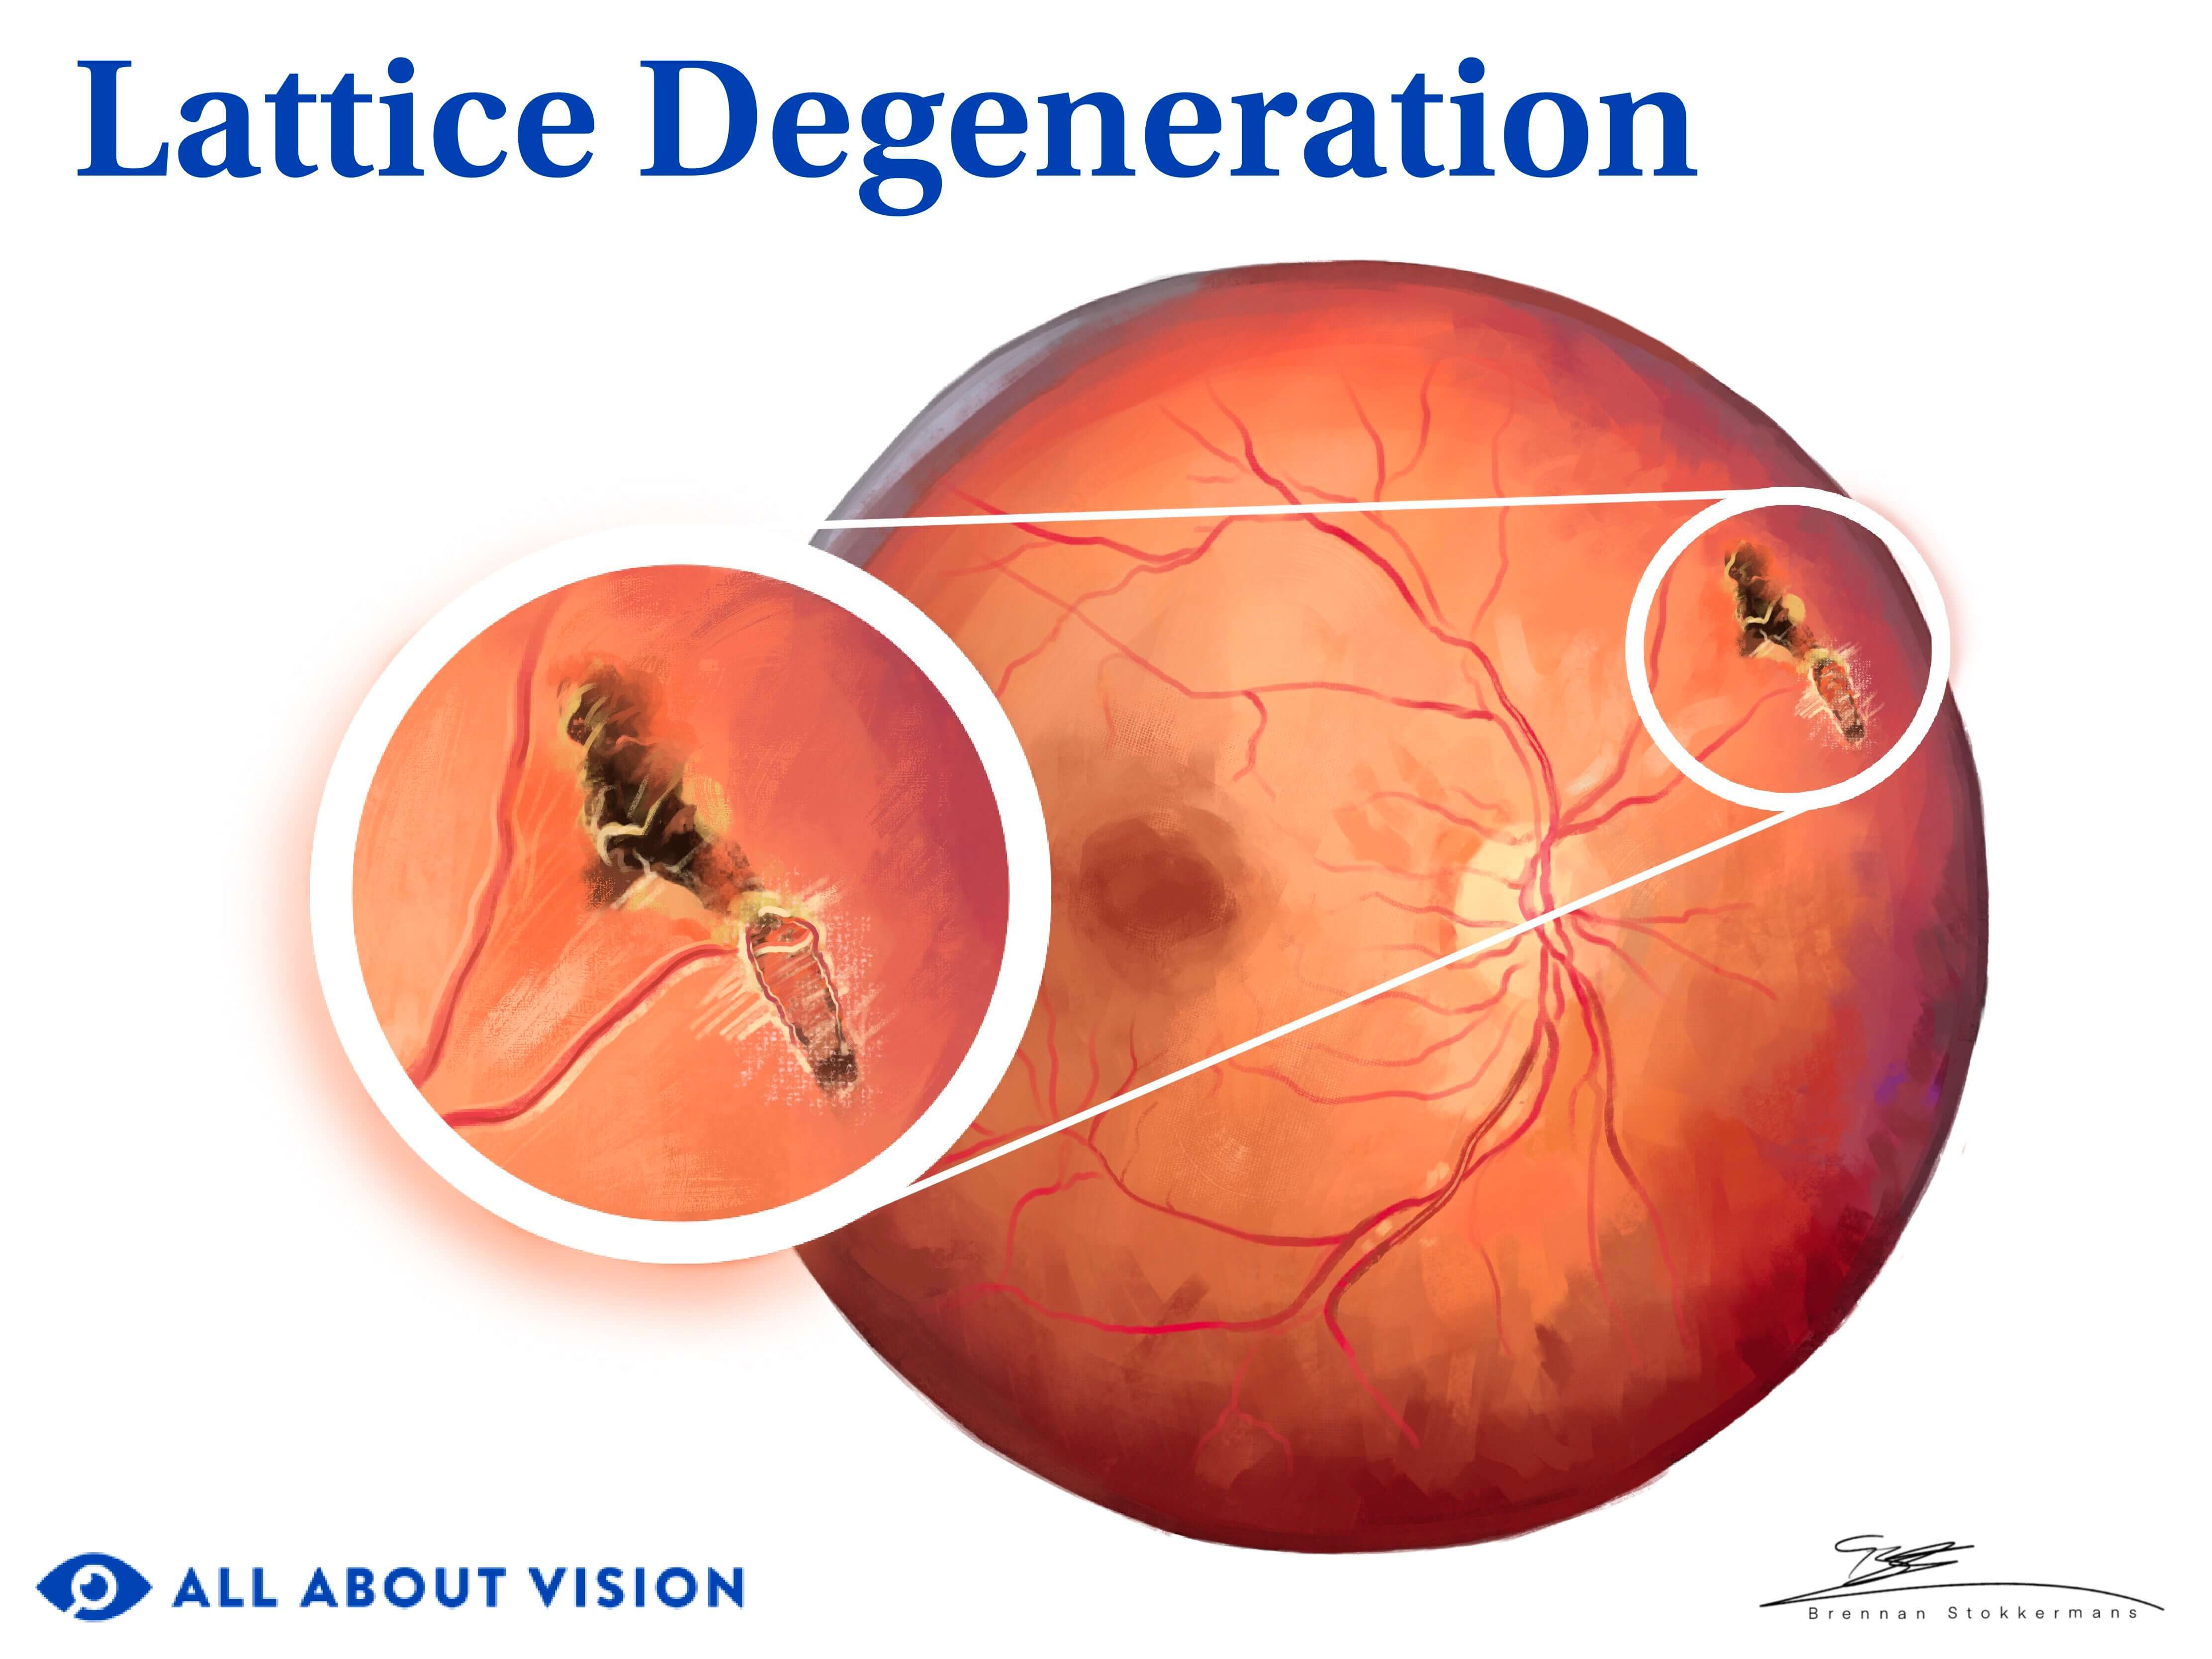 Medical illustration of lattice degeneration of the eye.